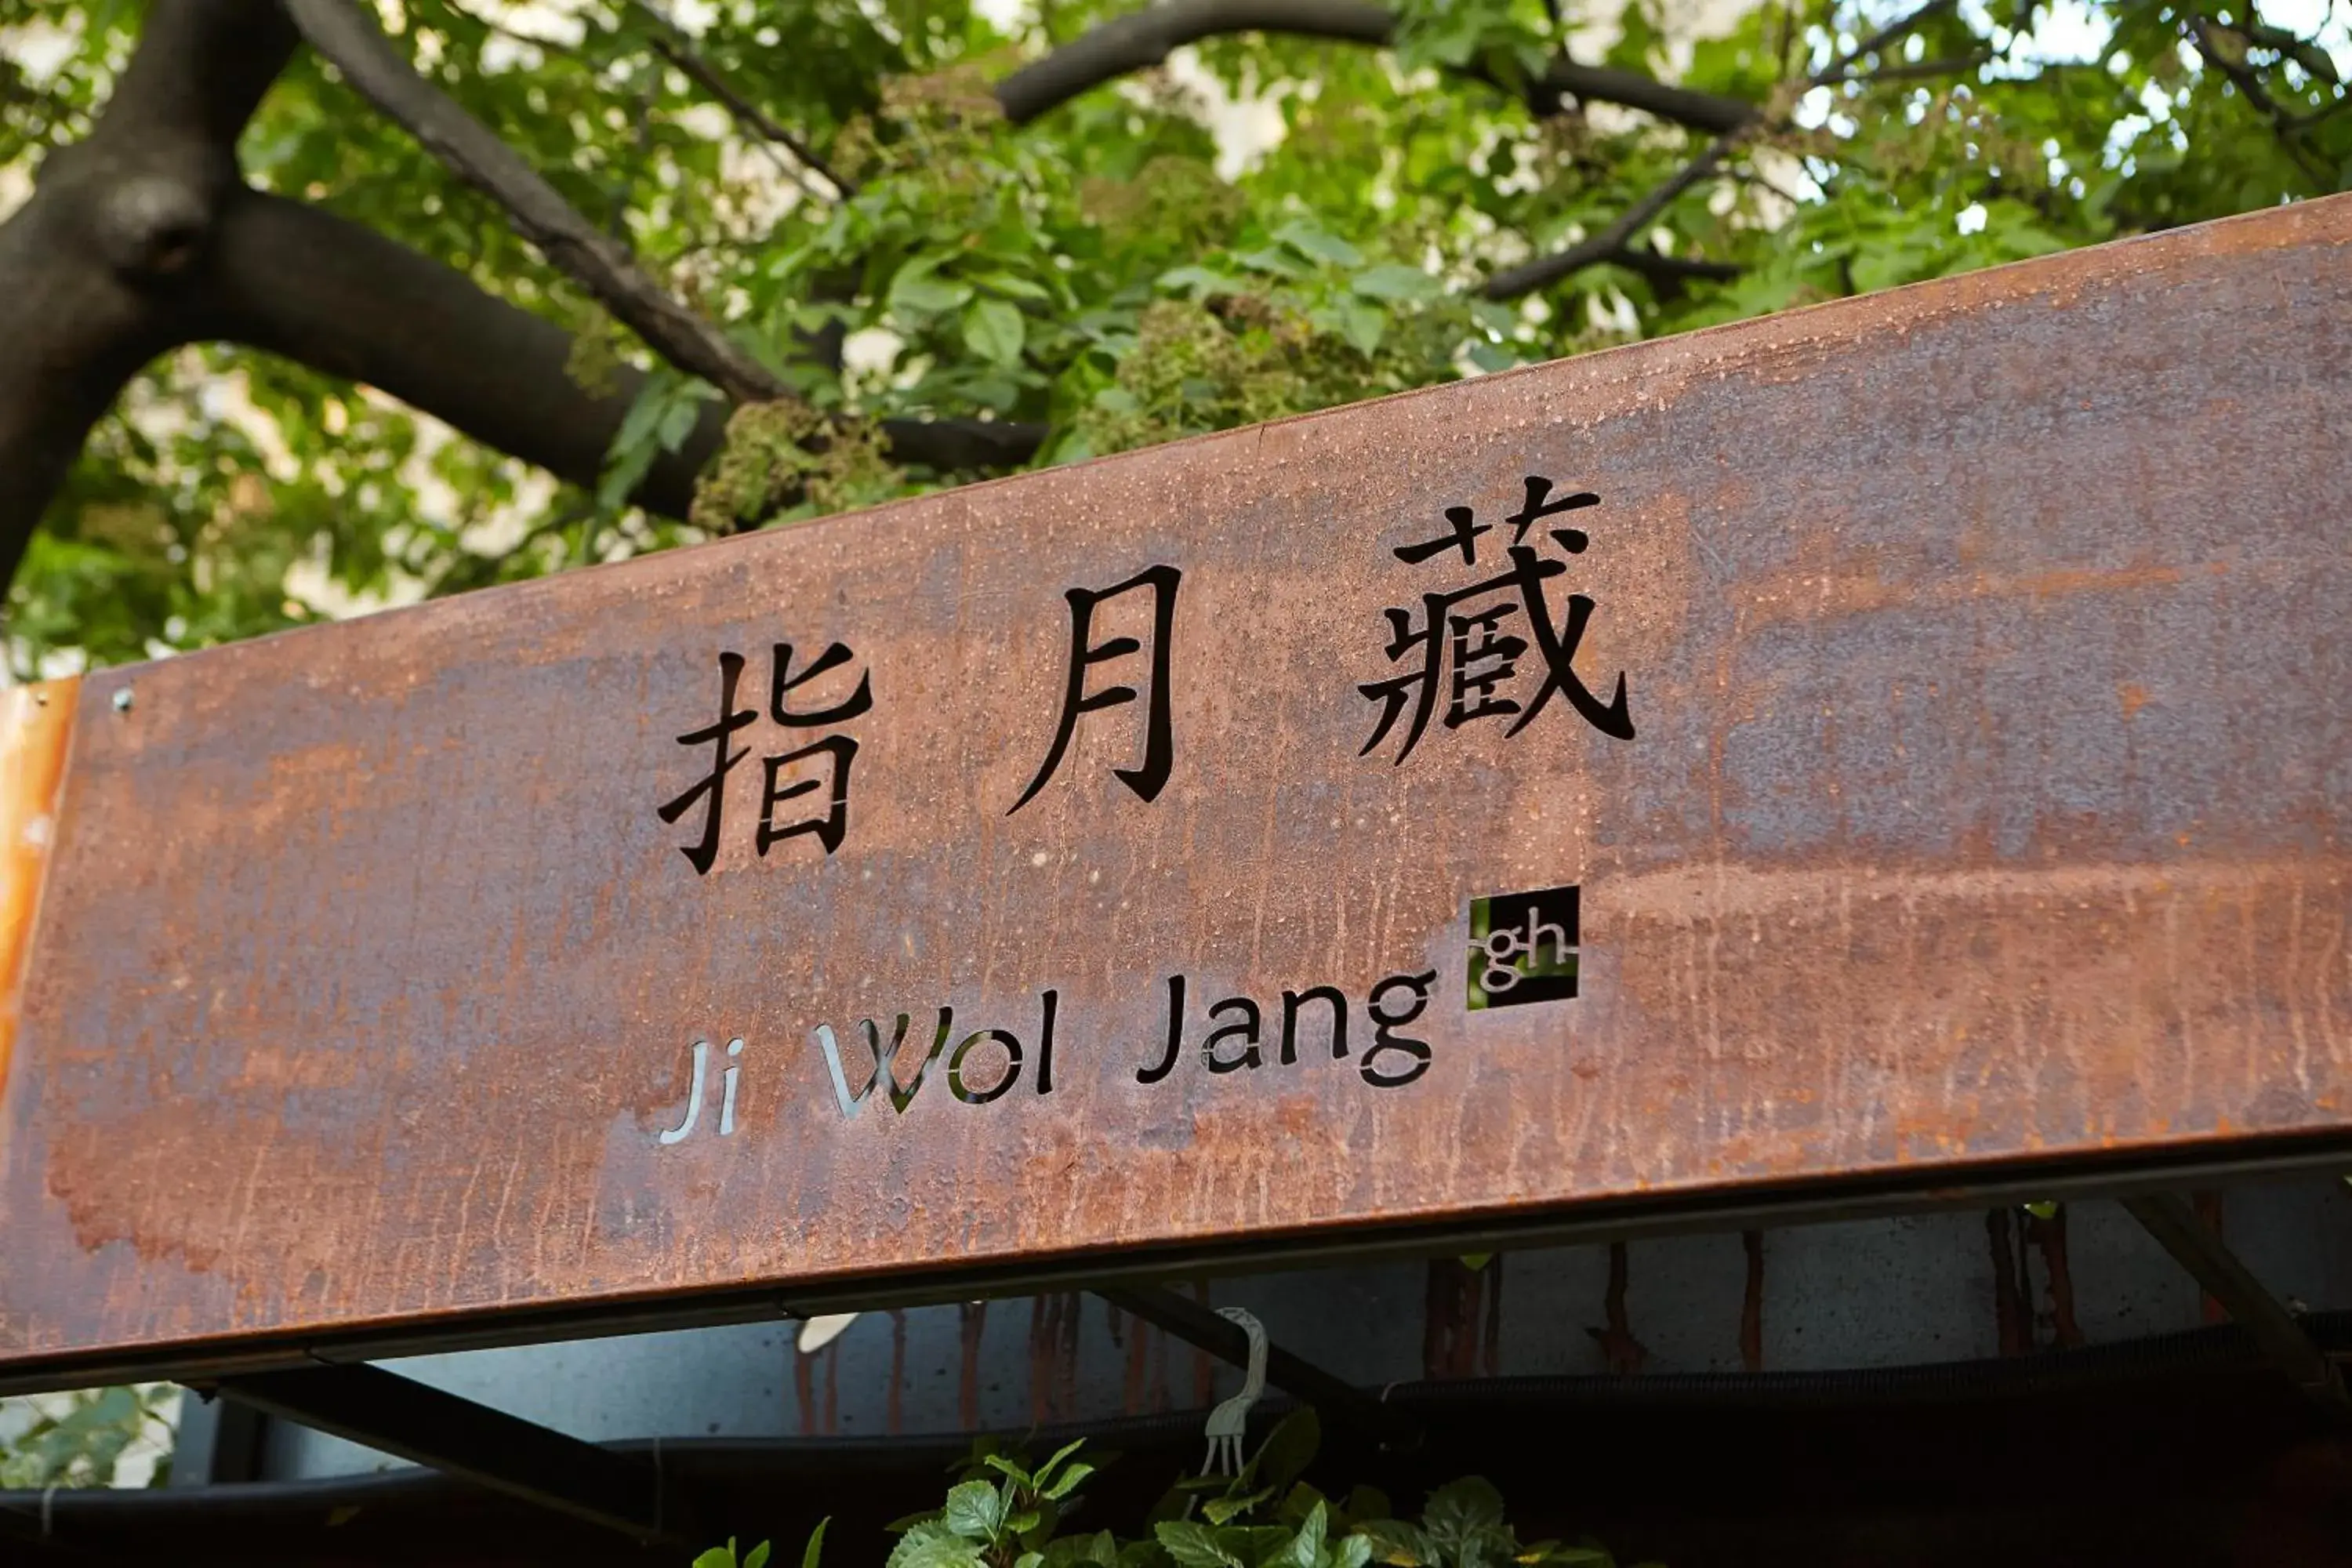 Property logo or sign in Jiwoljang Guest House